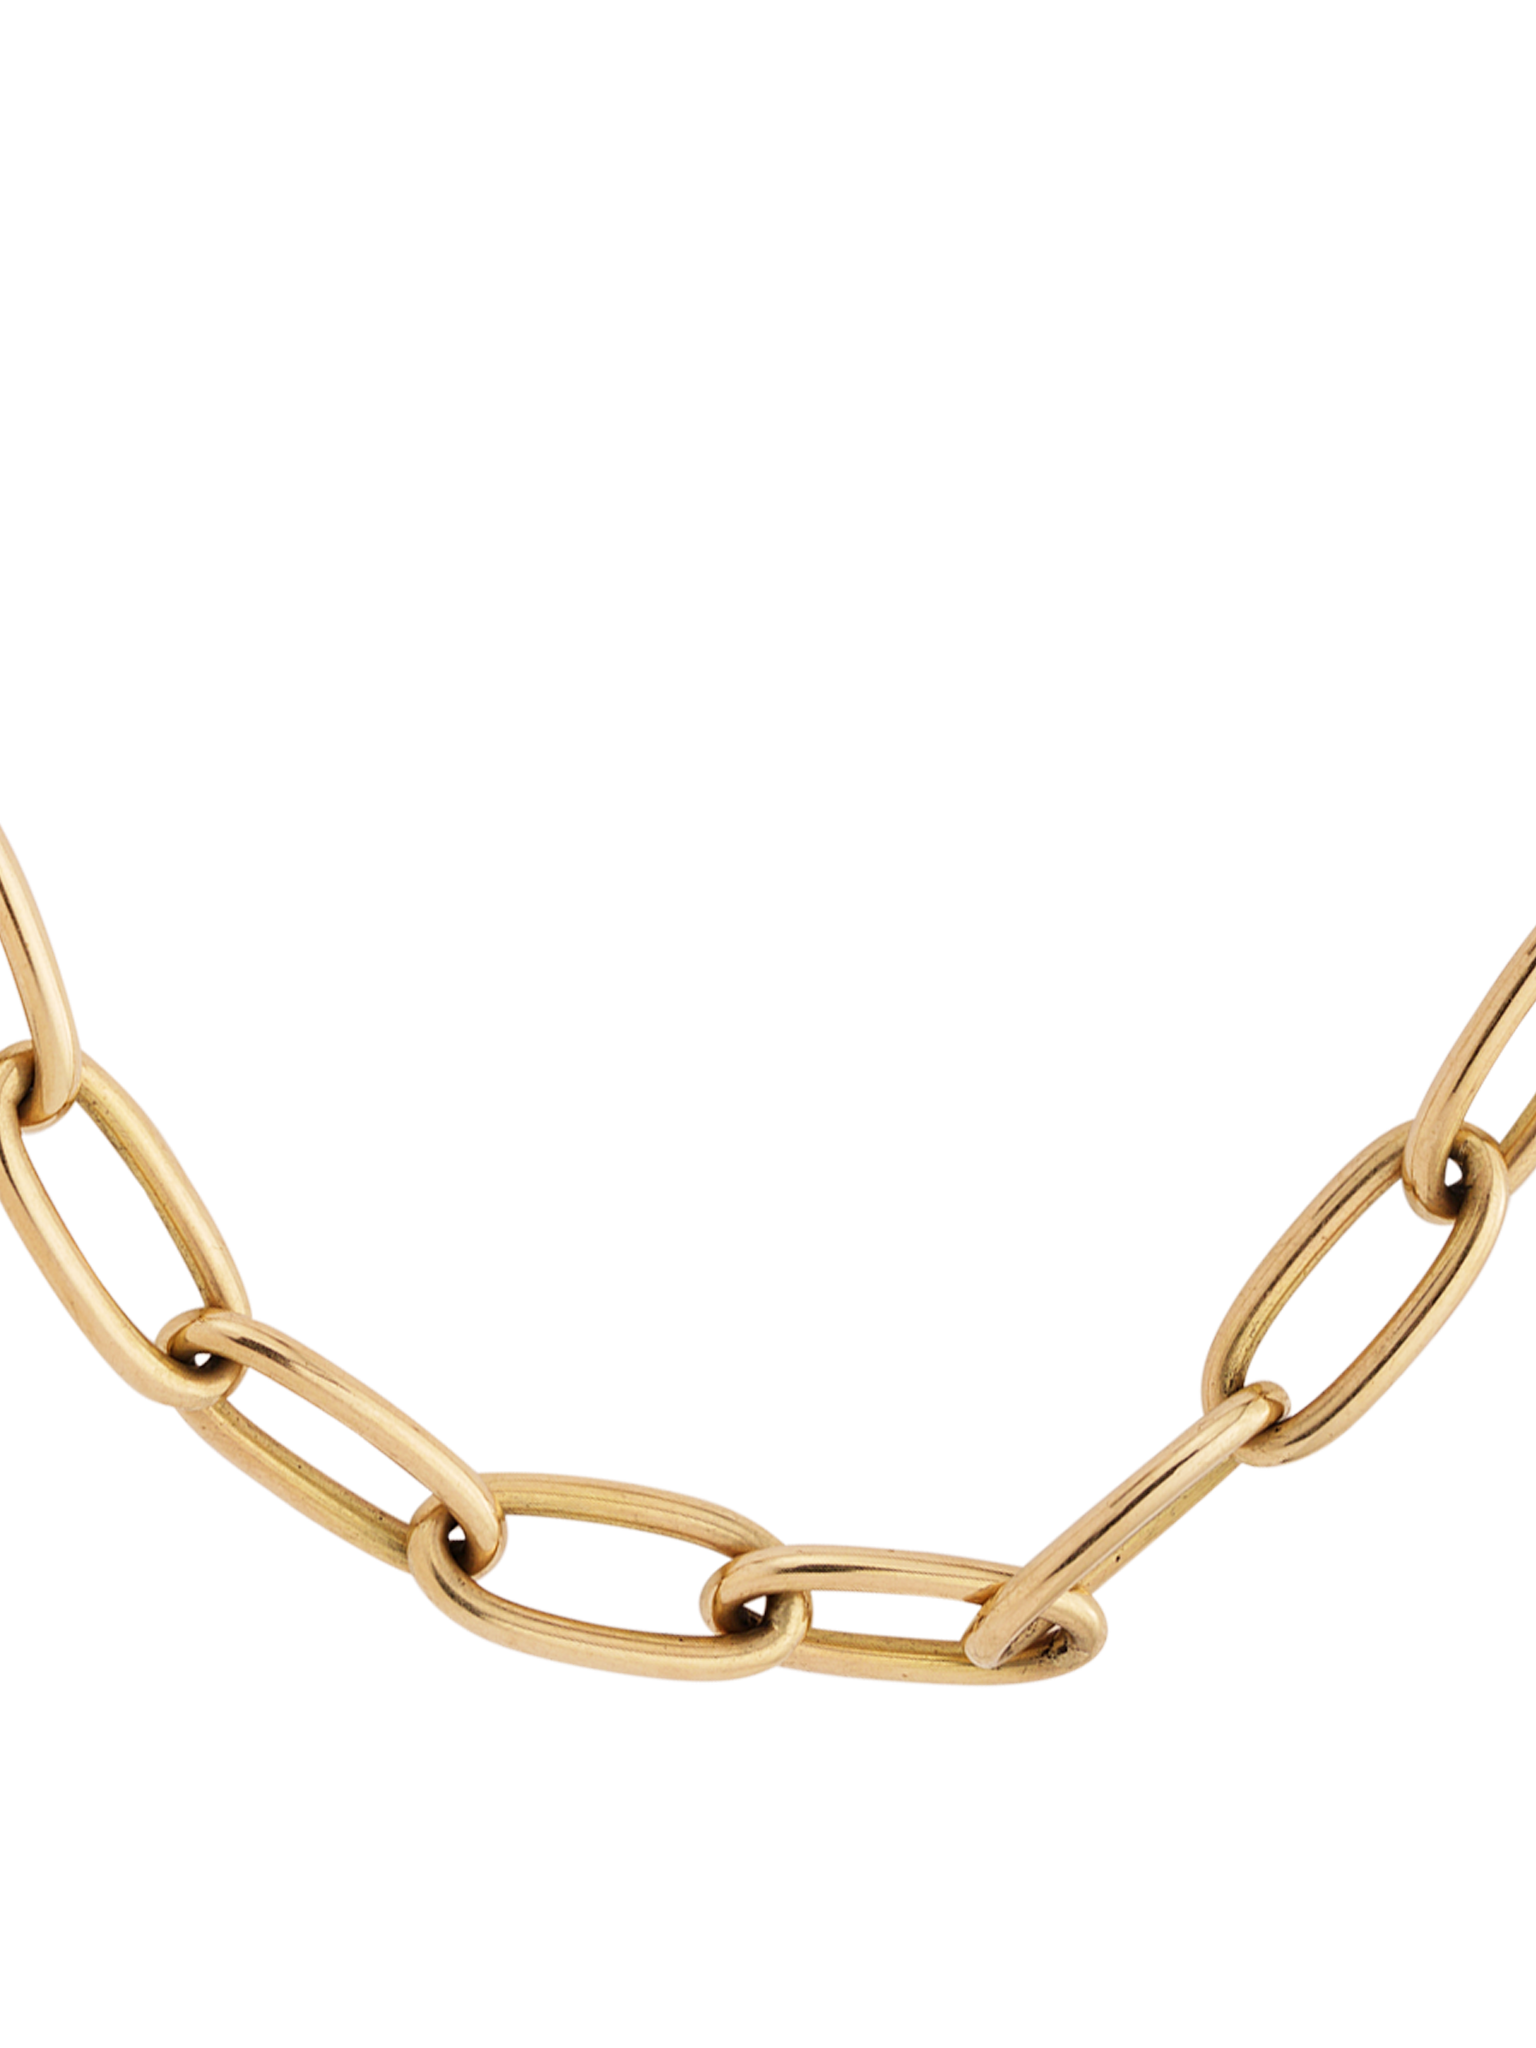 Oversized large oval link 14k necklace